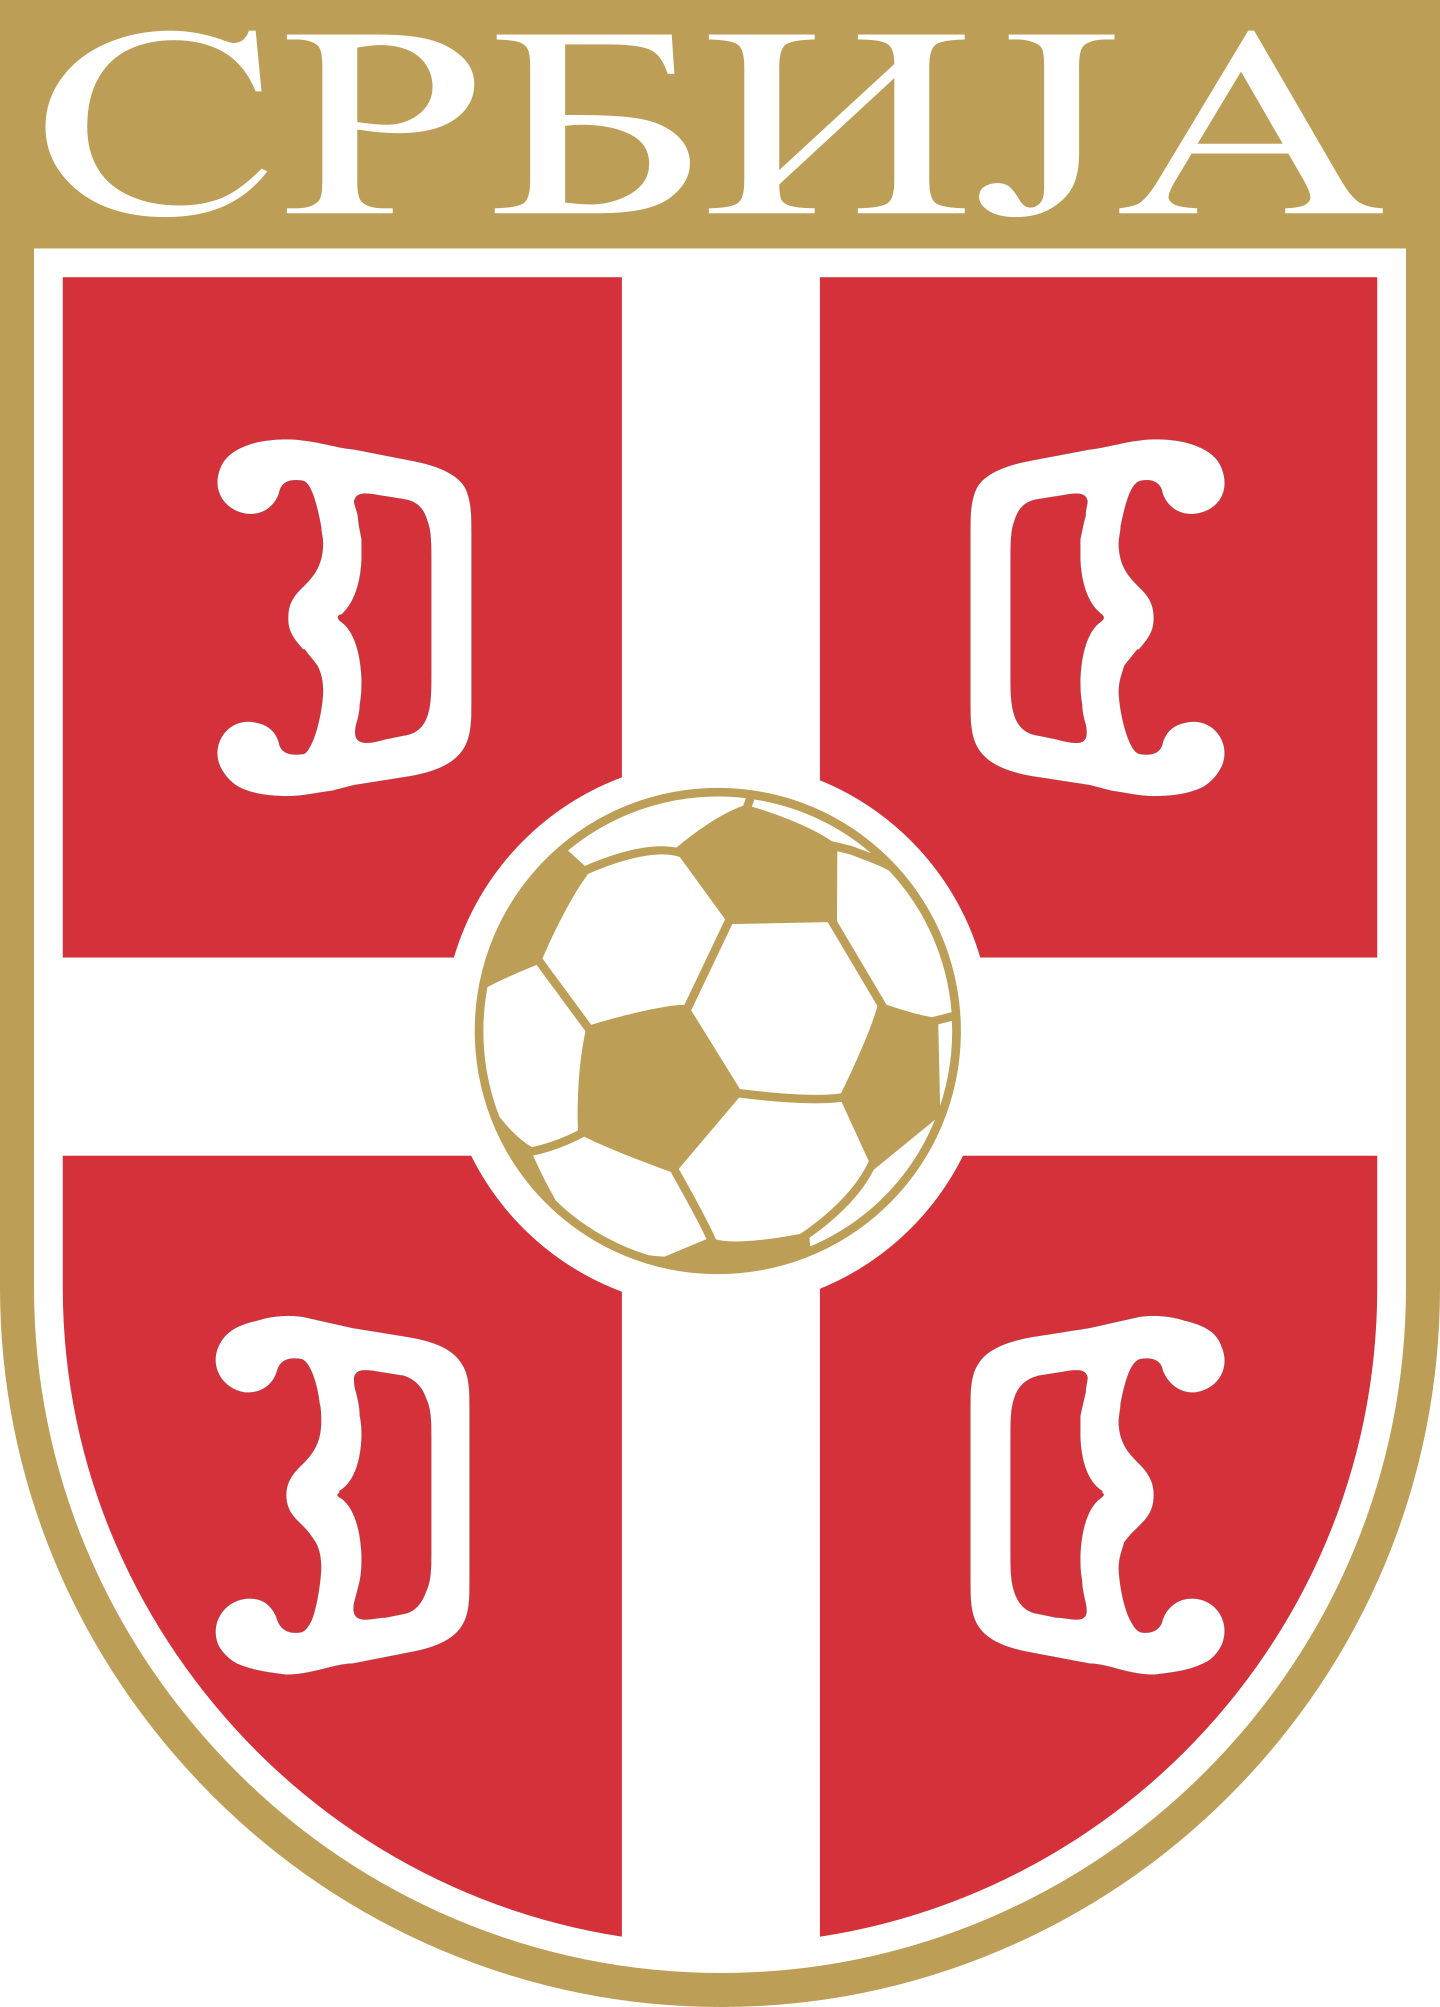 serbia national football team logo 2 - Serbia National Football Team Logo